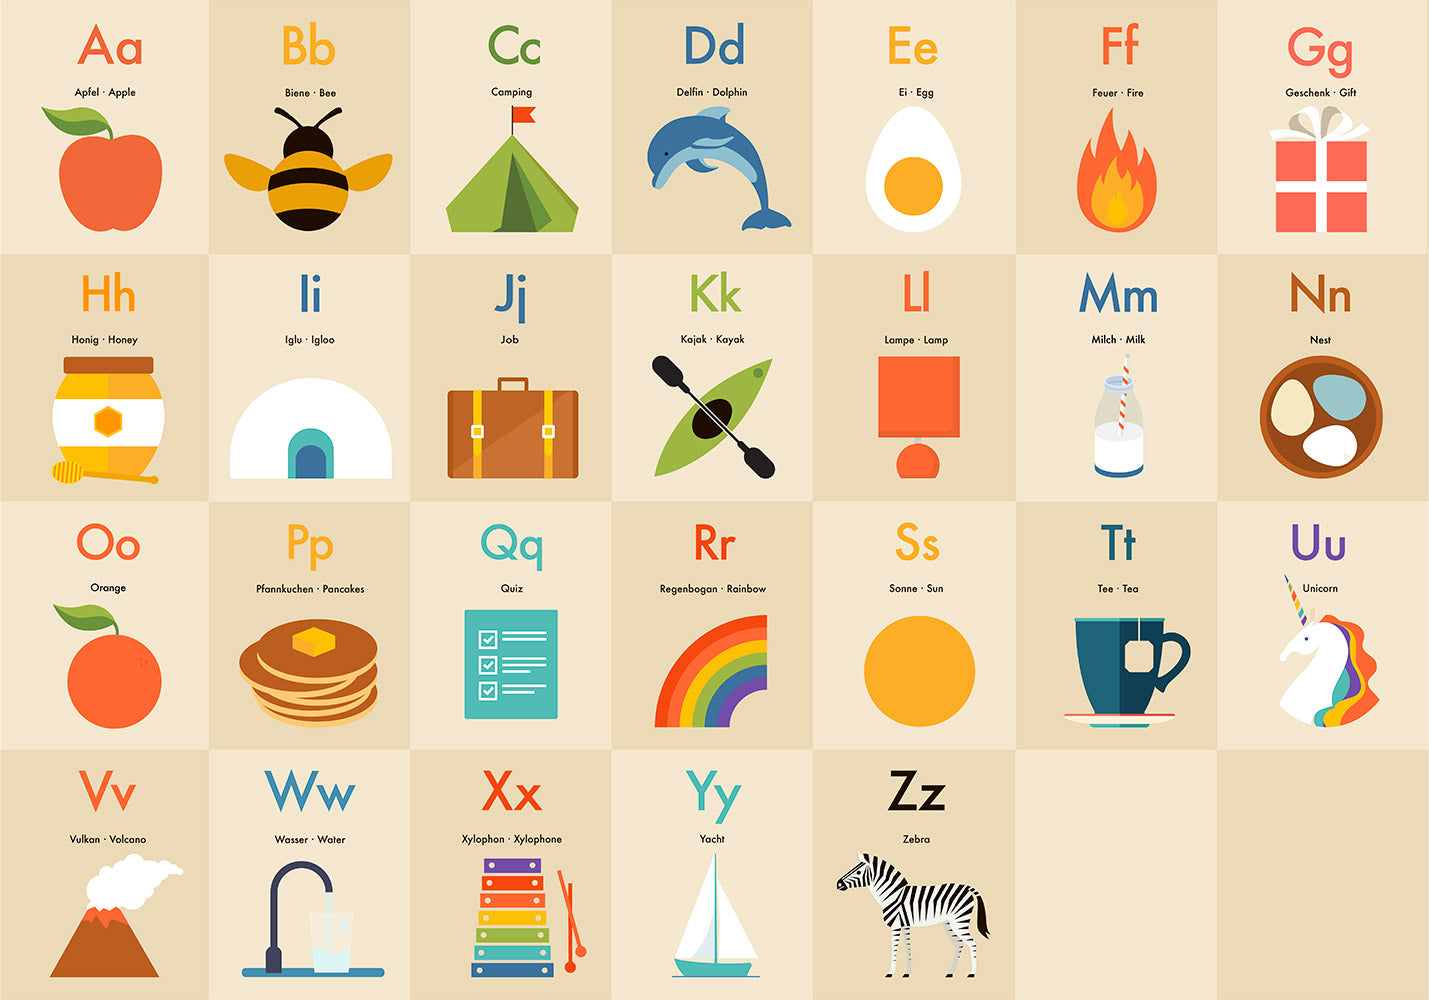 Full Alphabet - Children's Alphabet Poster in German and English